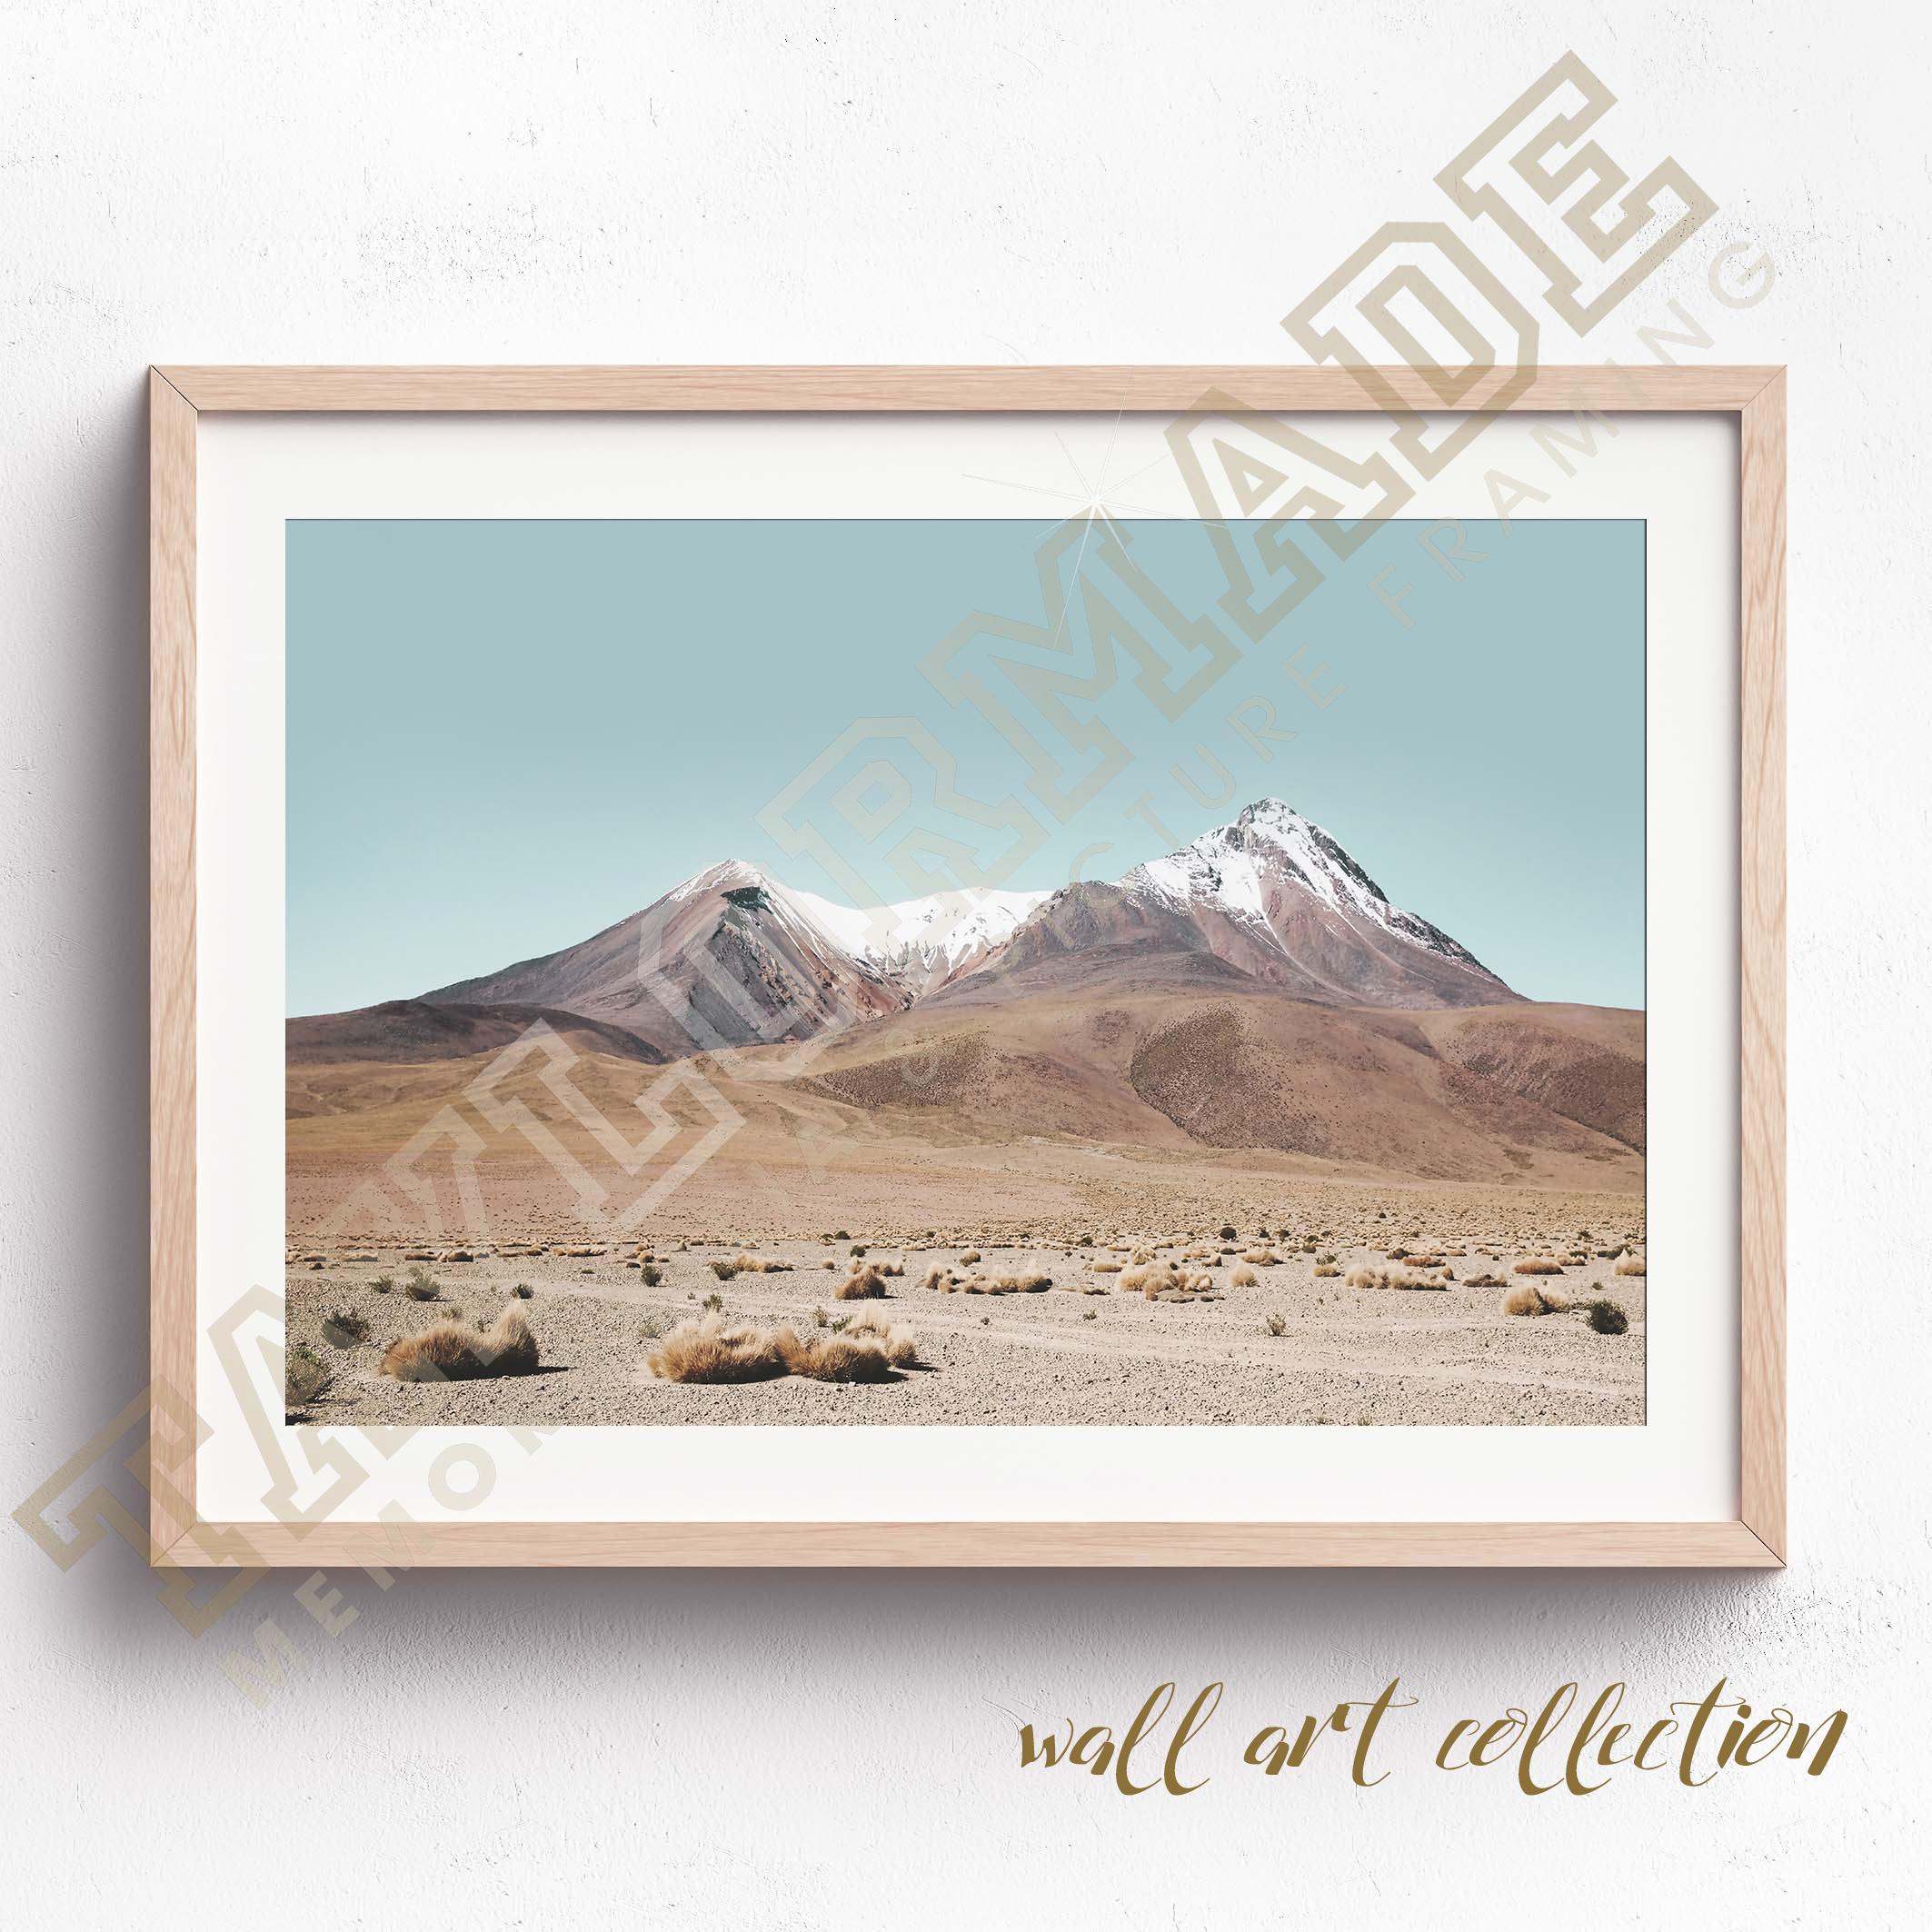 Wall Art Collection – White Desert Caps